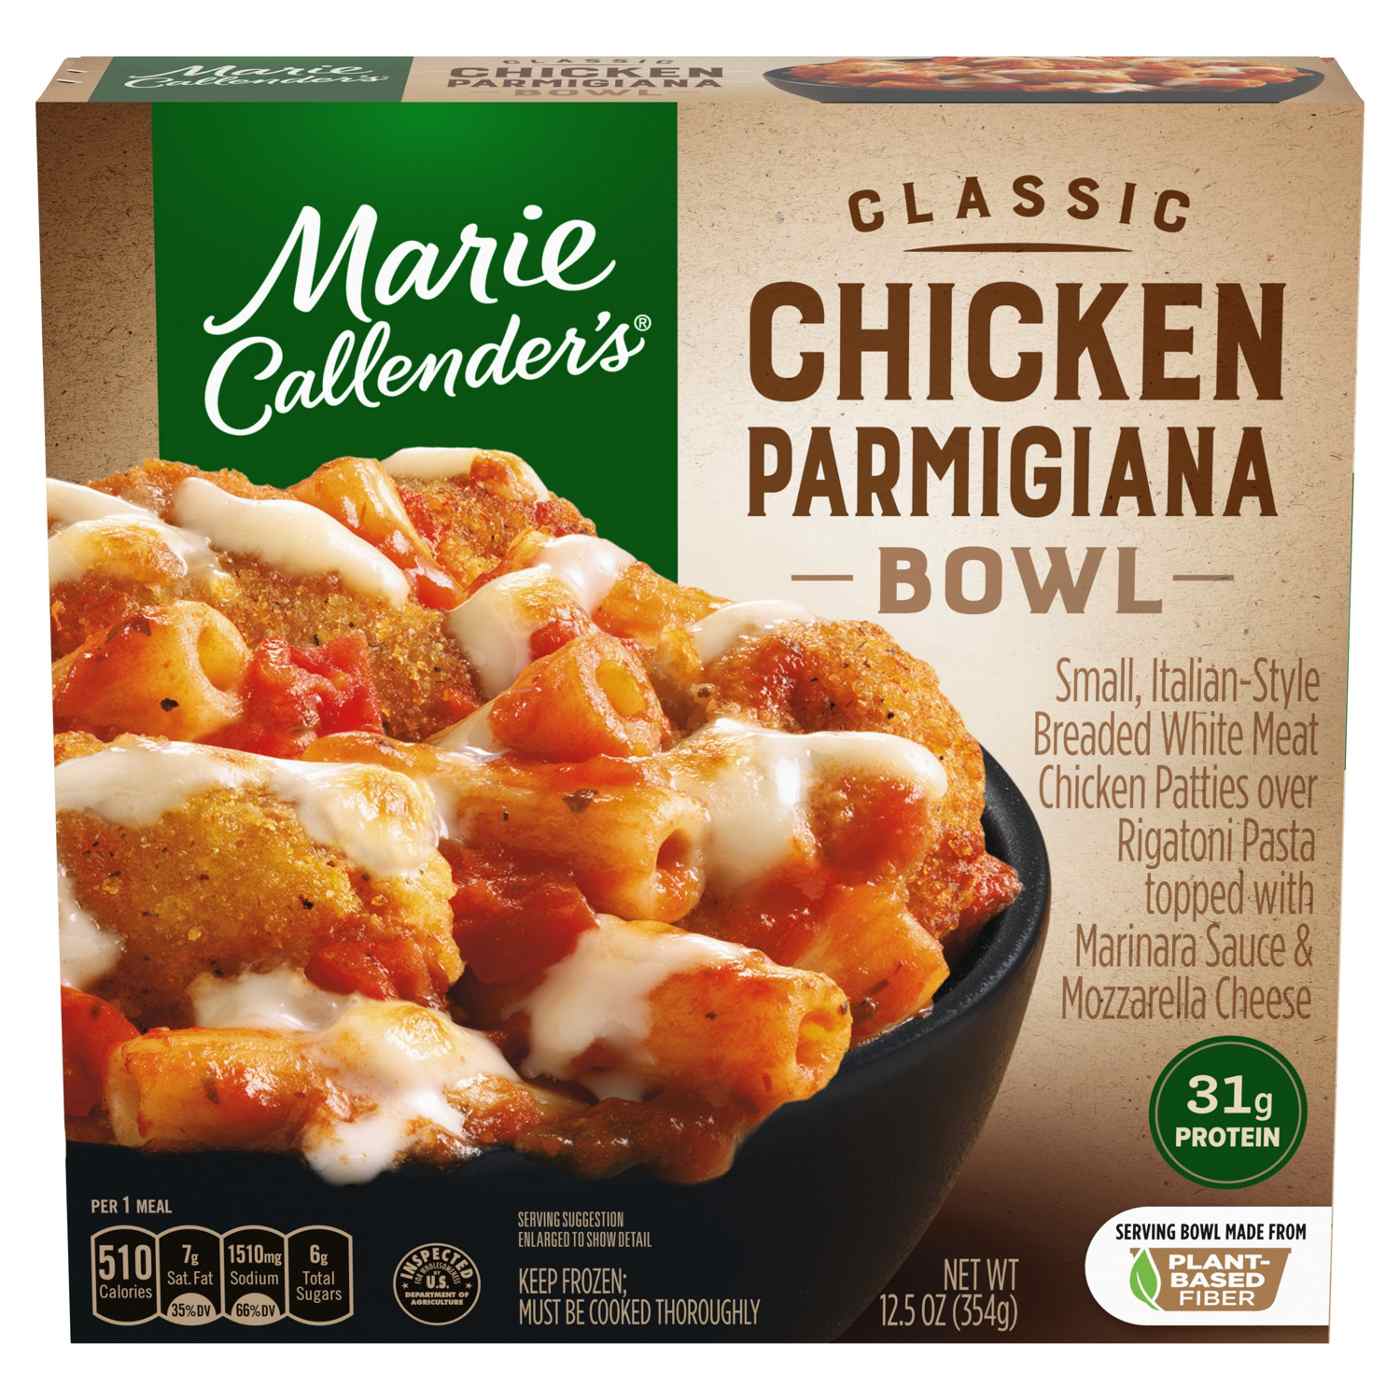 Marie Callender's Classic Chicken Parmigiana Bowl Frozen Meal; image 1 of 2